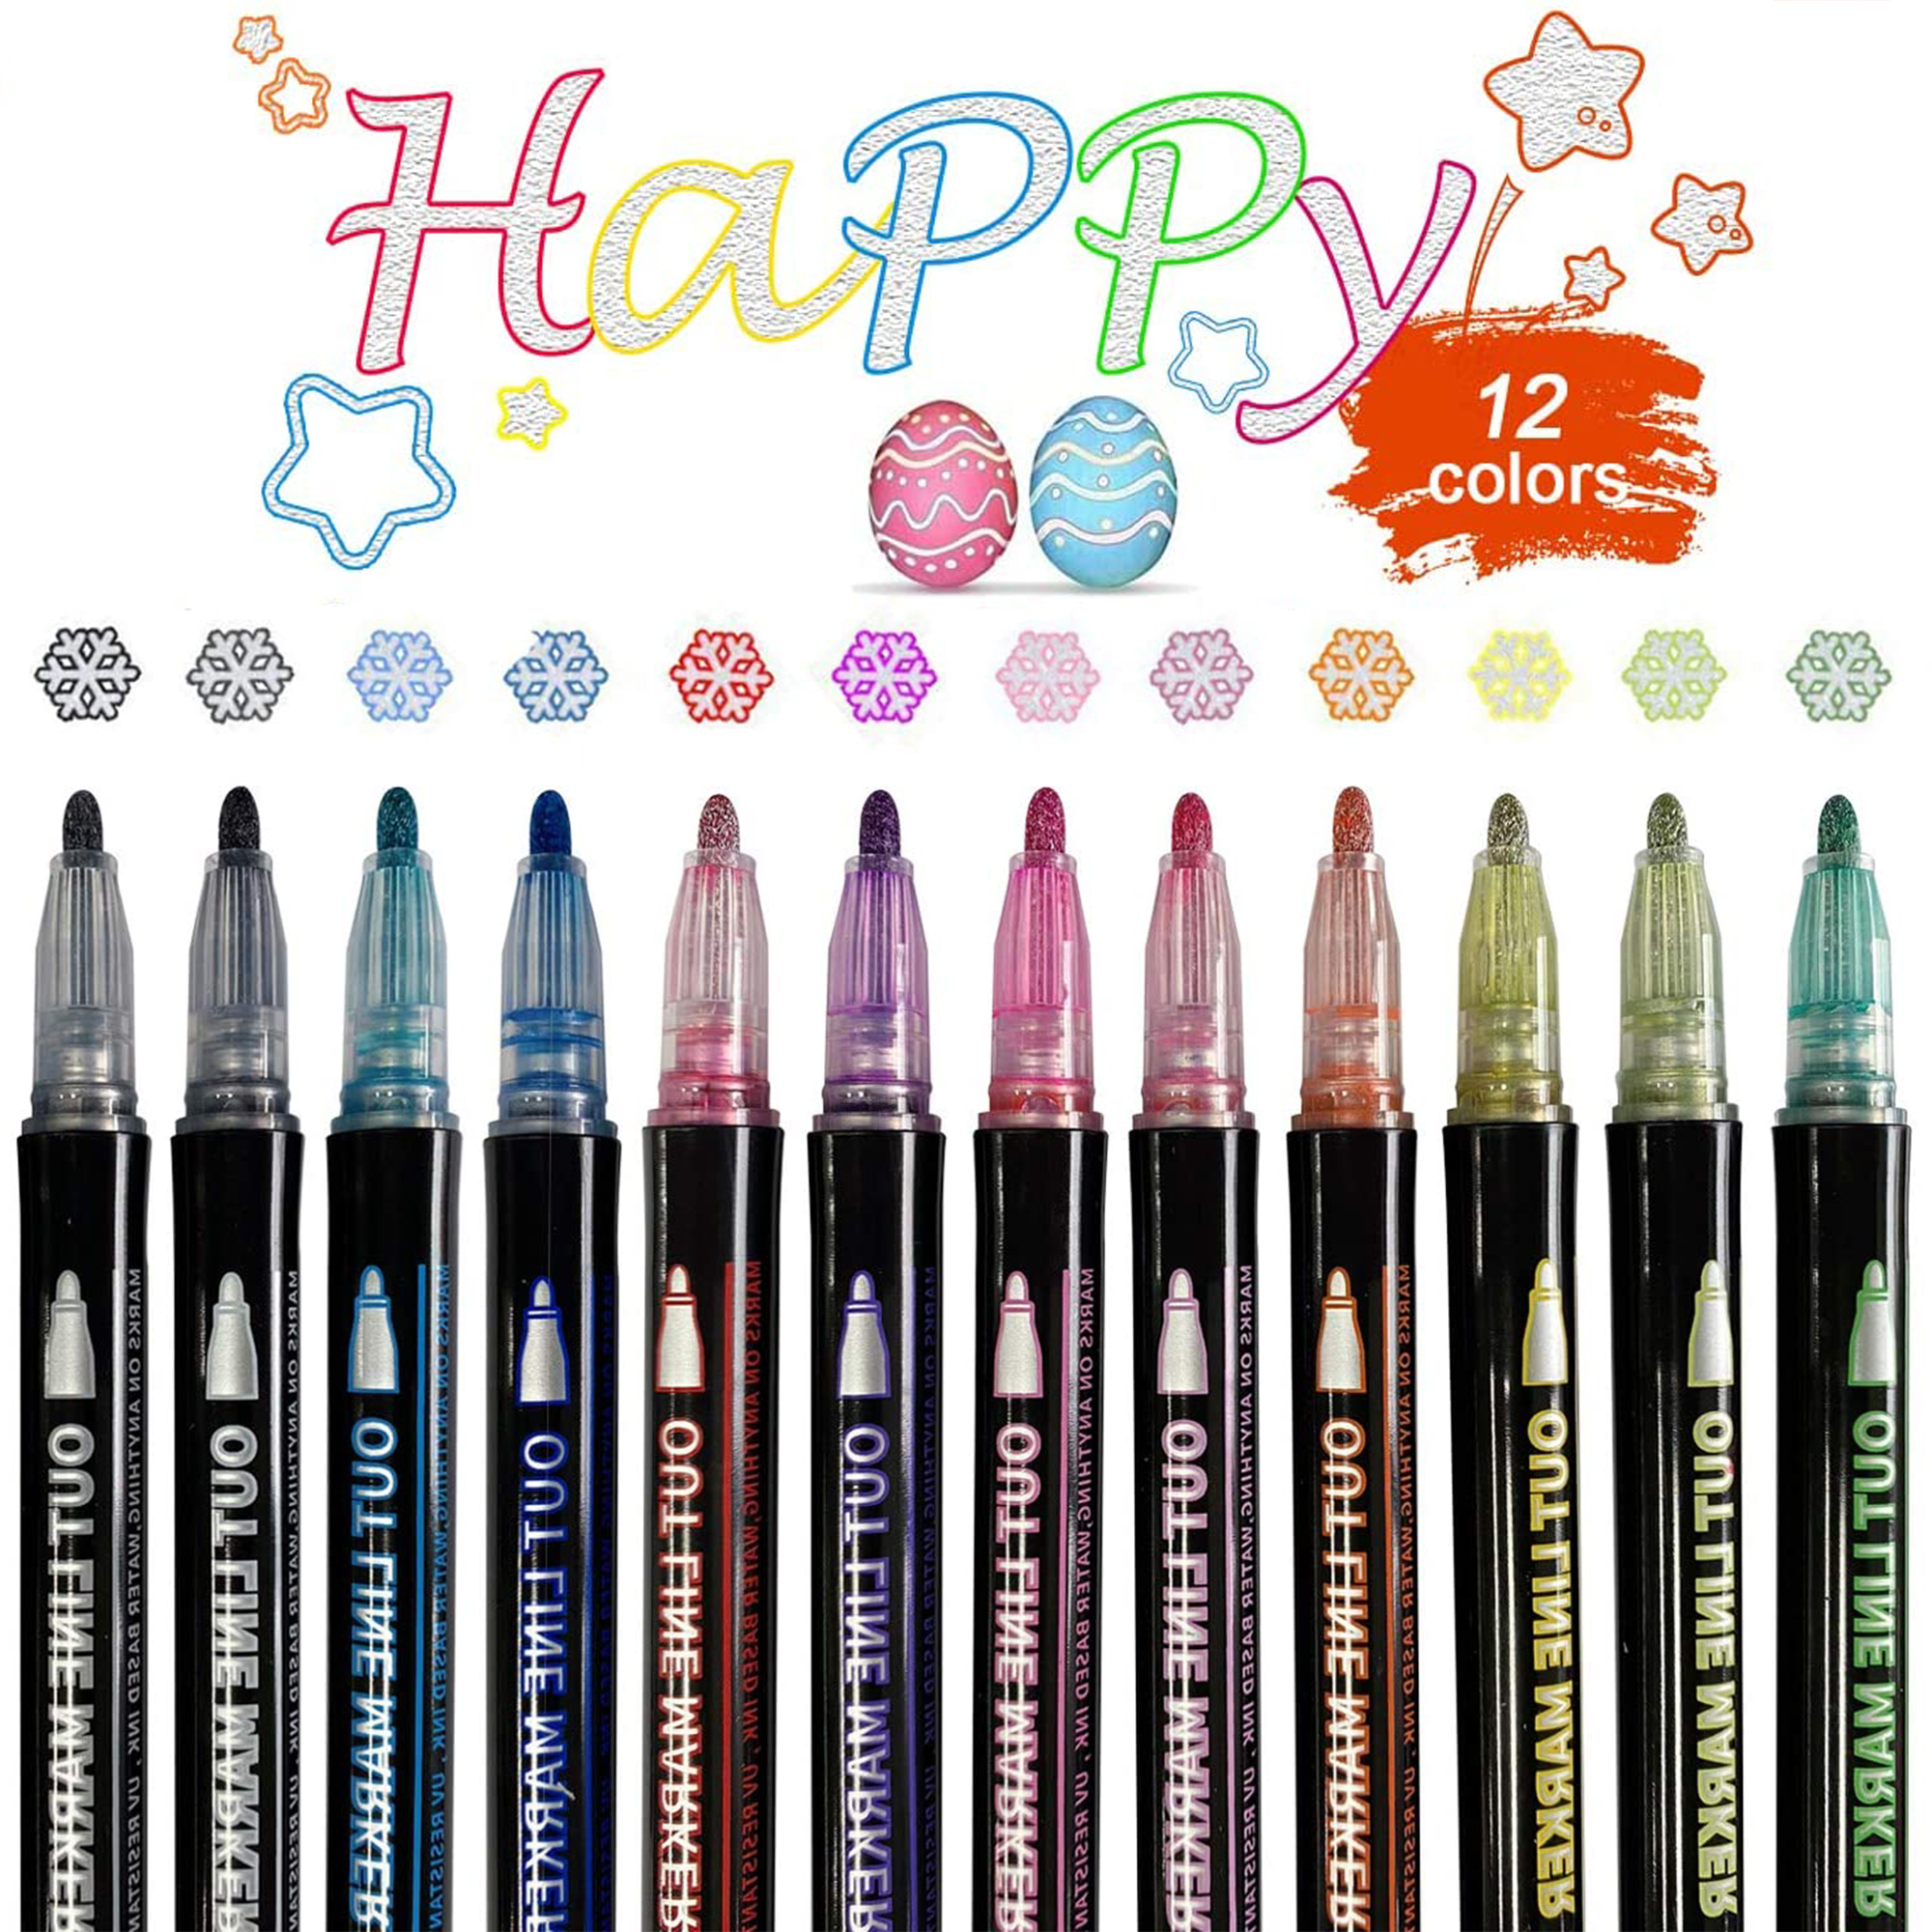 12 Colors Shimmer Outline Markers, Double Line Metallic Pen Set